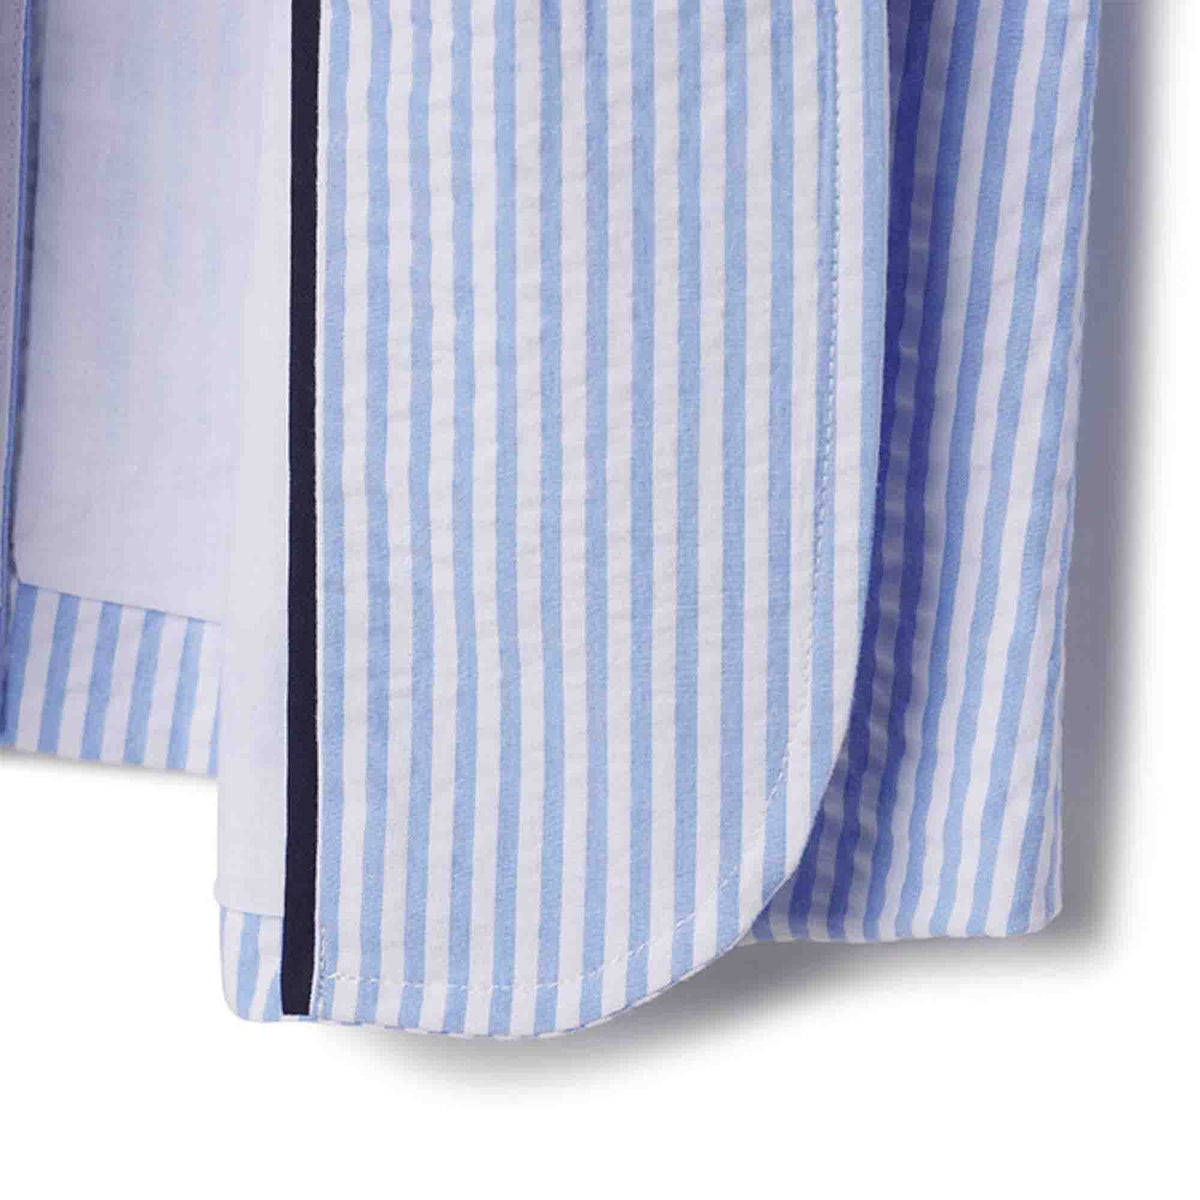 Classic and Preppy Everett Blazer, Vista Blue Seersucker-Outerwear-CPC - Classic Prep Childrenswear